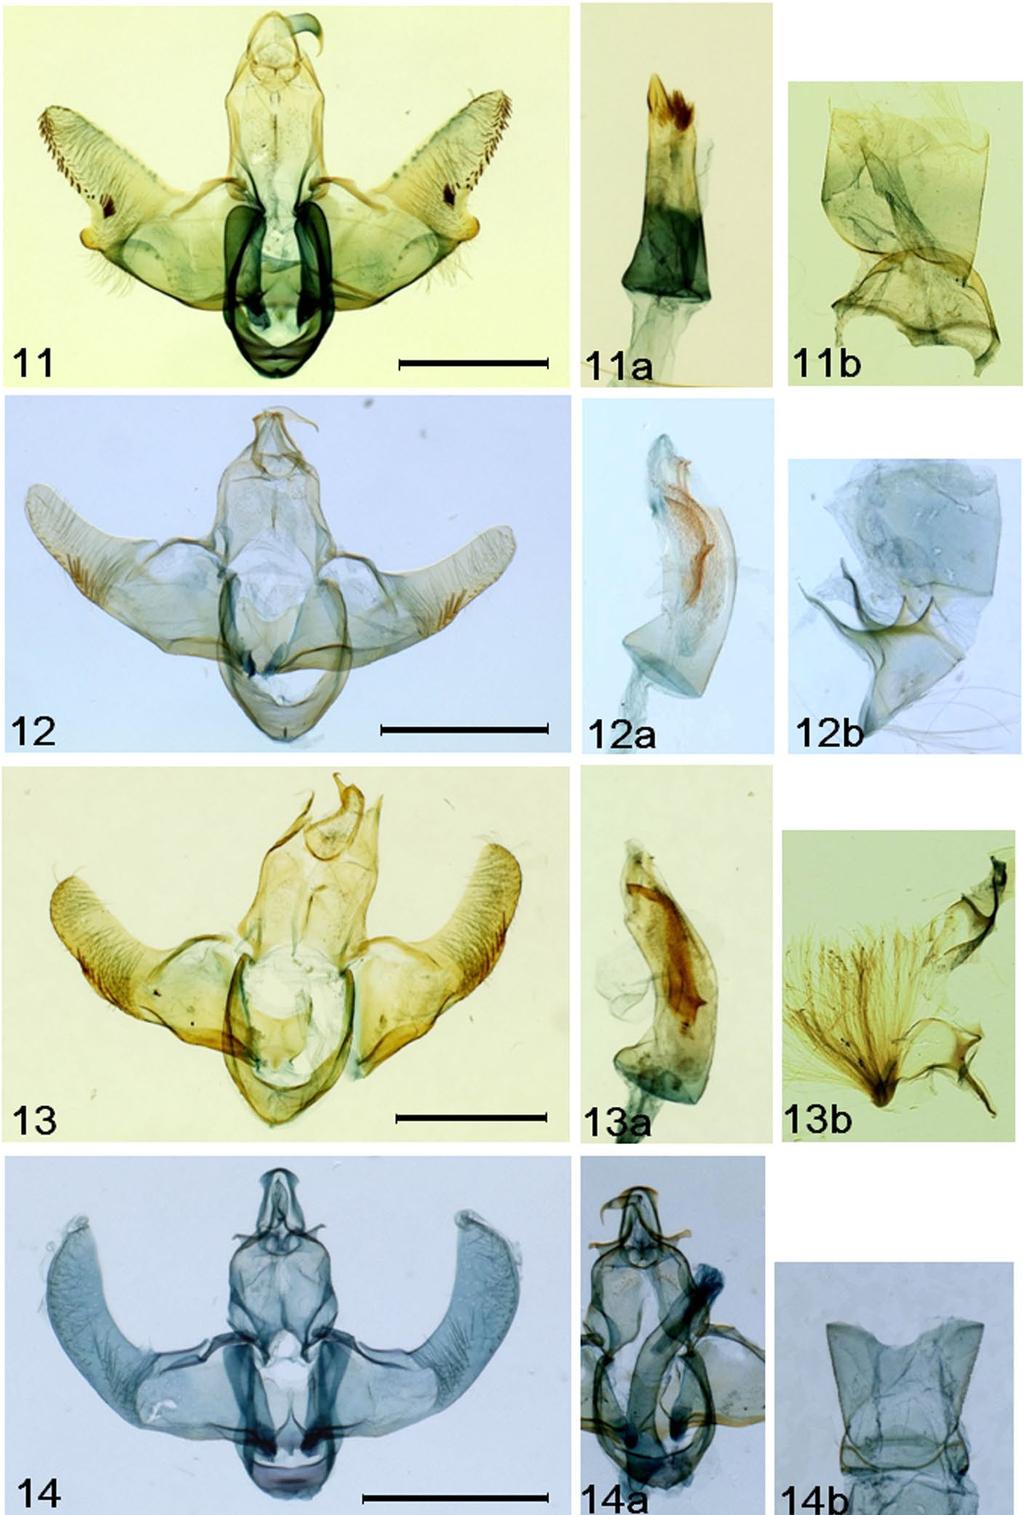 12 TROP. LEPID. RES., 22(1): 8-15, 2012 PARK: Seven New species of Lecithoceridae Figs. 11-14. Male genitalia (a: Aedeagus, b: Abdominal segments VII-VIII): 11, S.